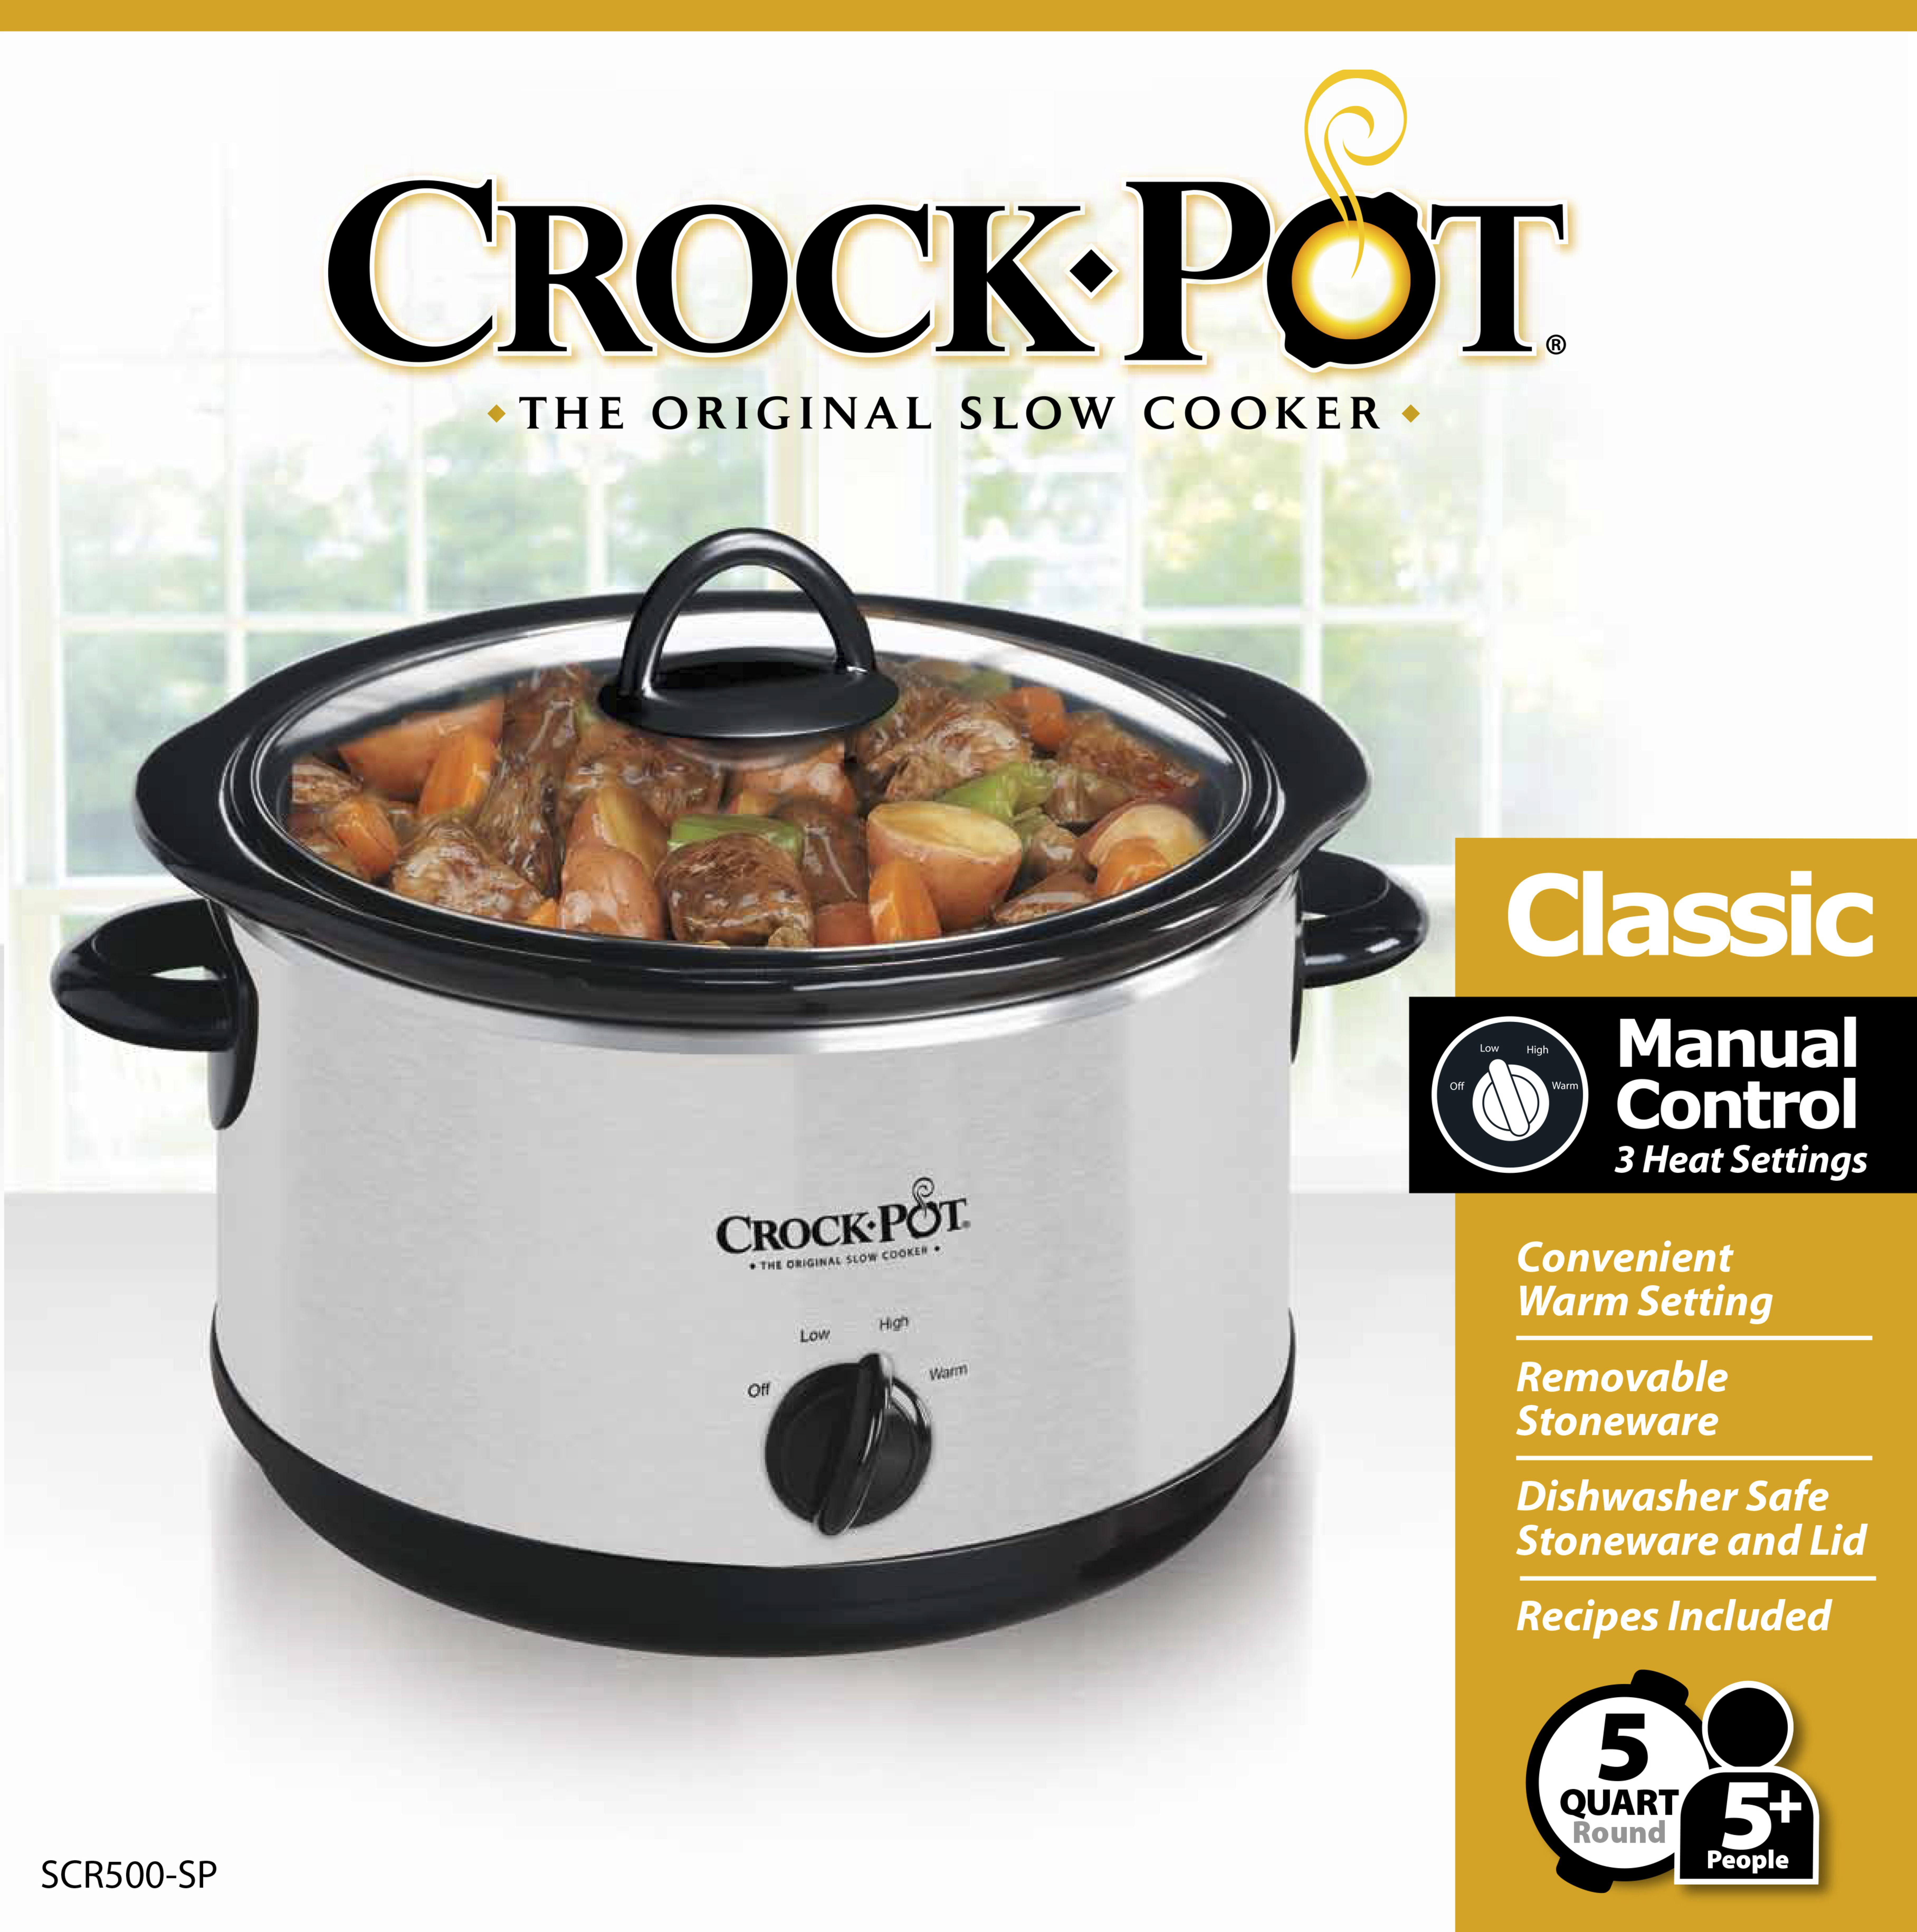 Crock-Pot Original Slow Cooker, Stainless Steel (SCR500-SP) - Walmart.com